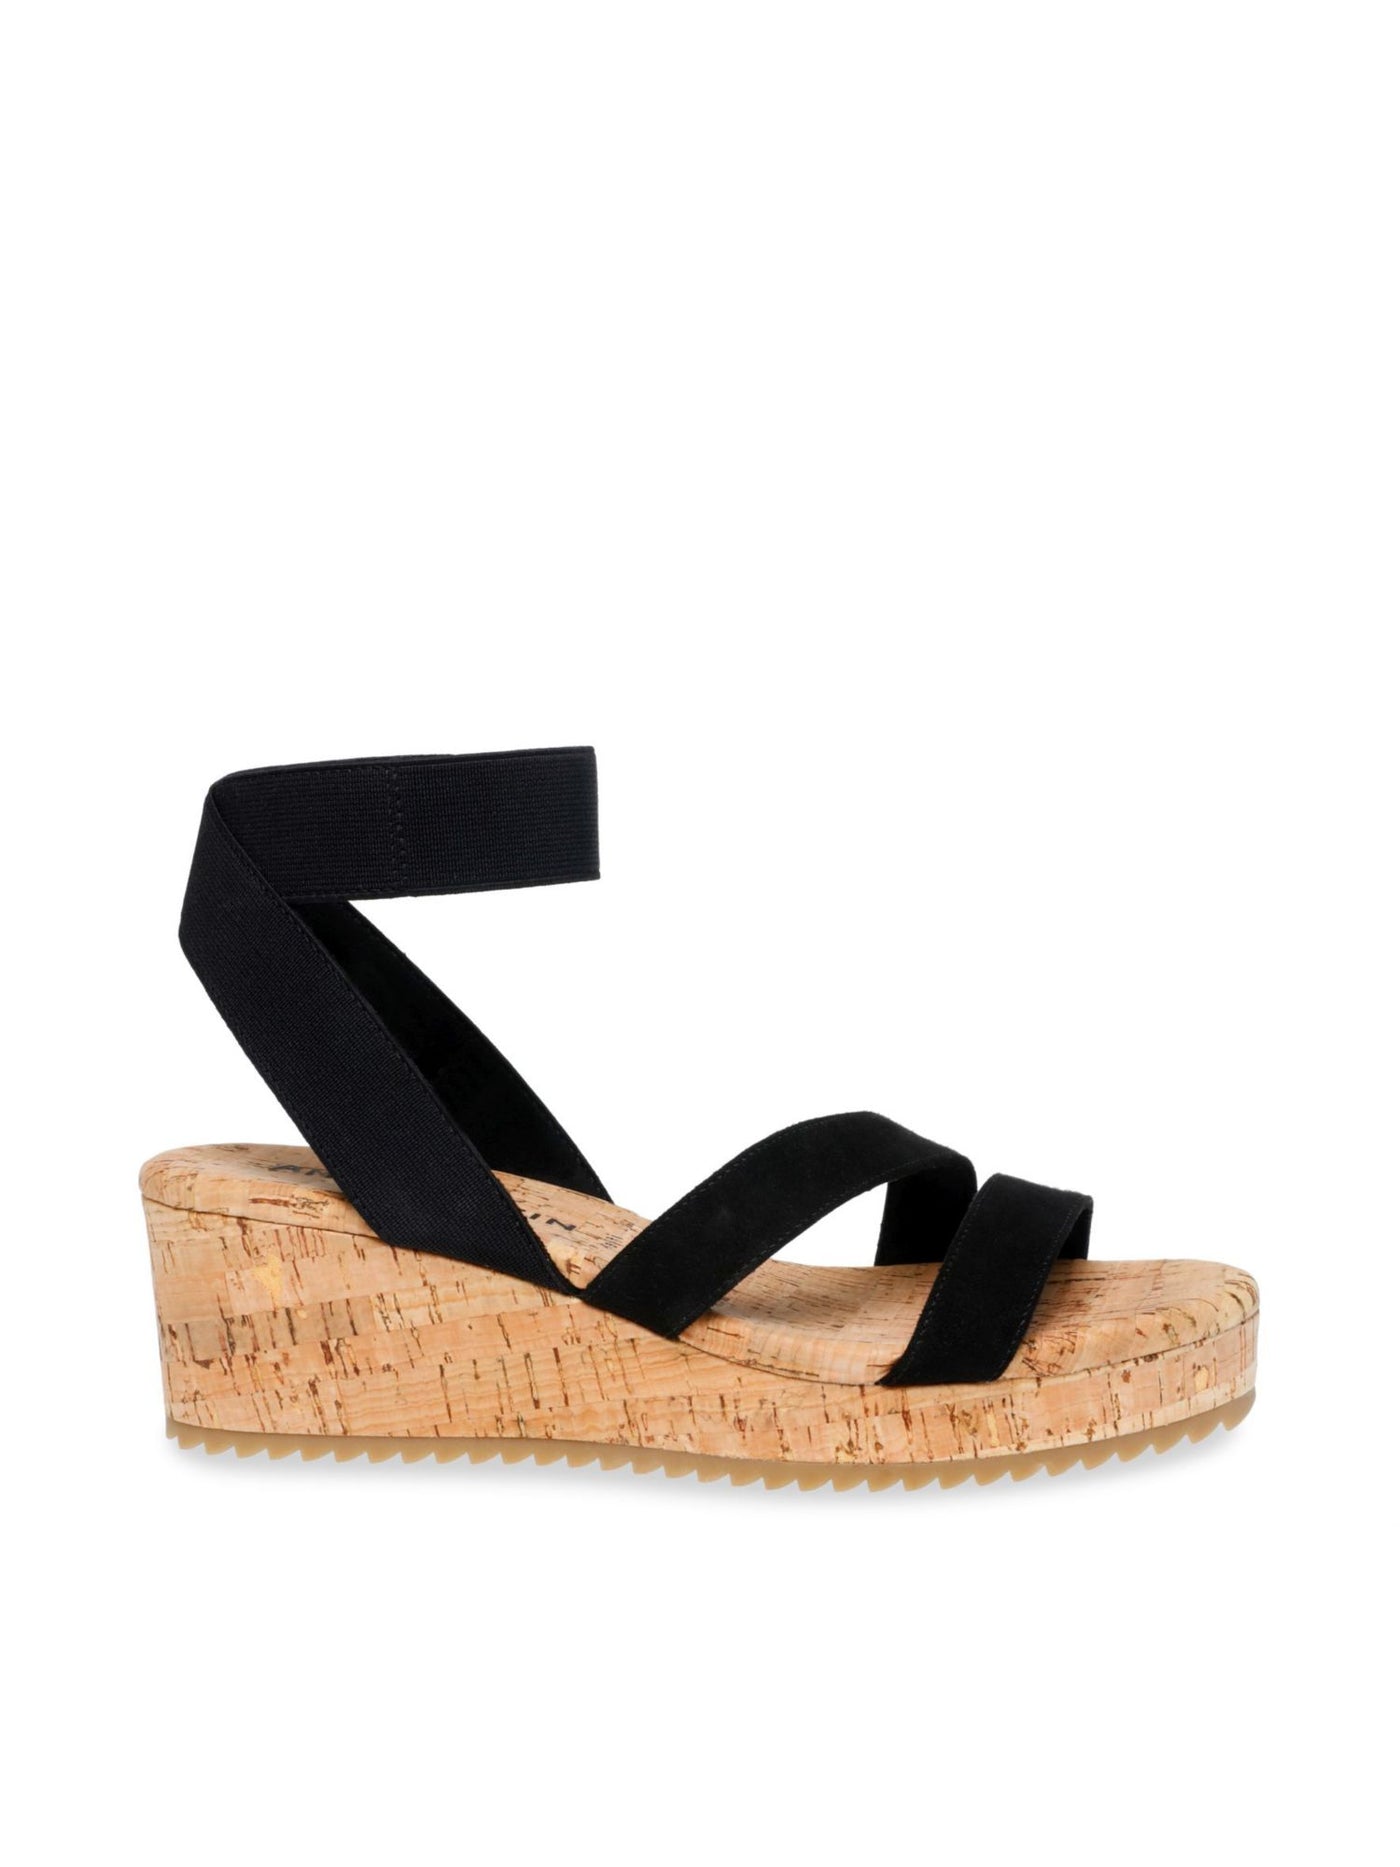 ANNE KLEIN Womens Black 1" Platform Padded Alyson Open Toe Wedge Slip On Sandals Shoes 9.5 M